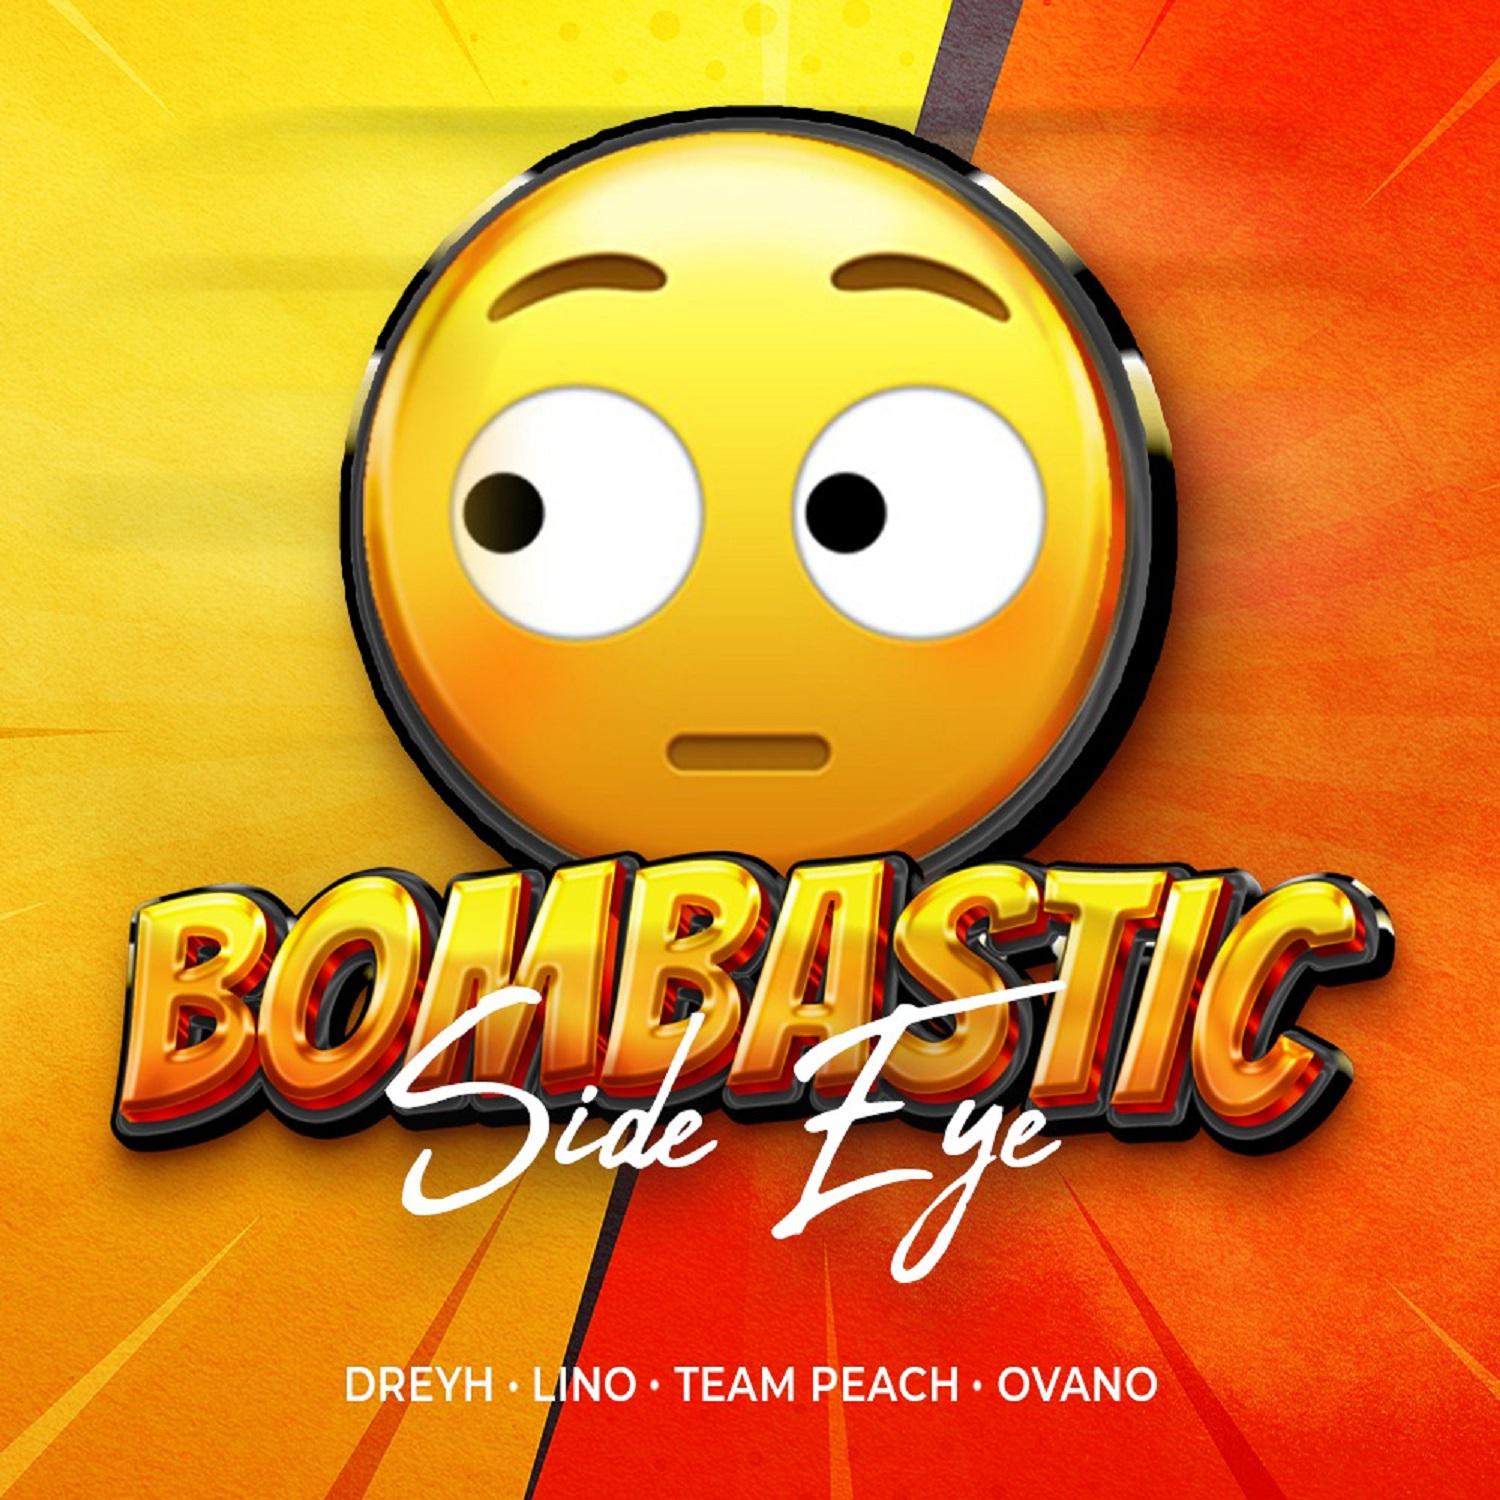 Постер альбома Bombastic Side Eye